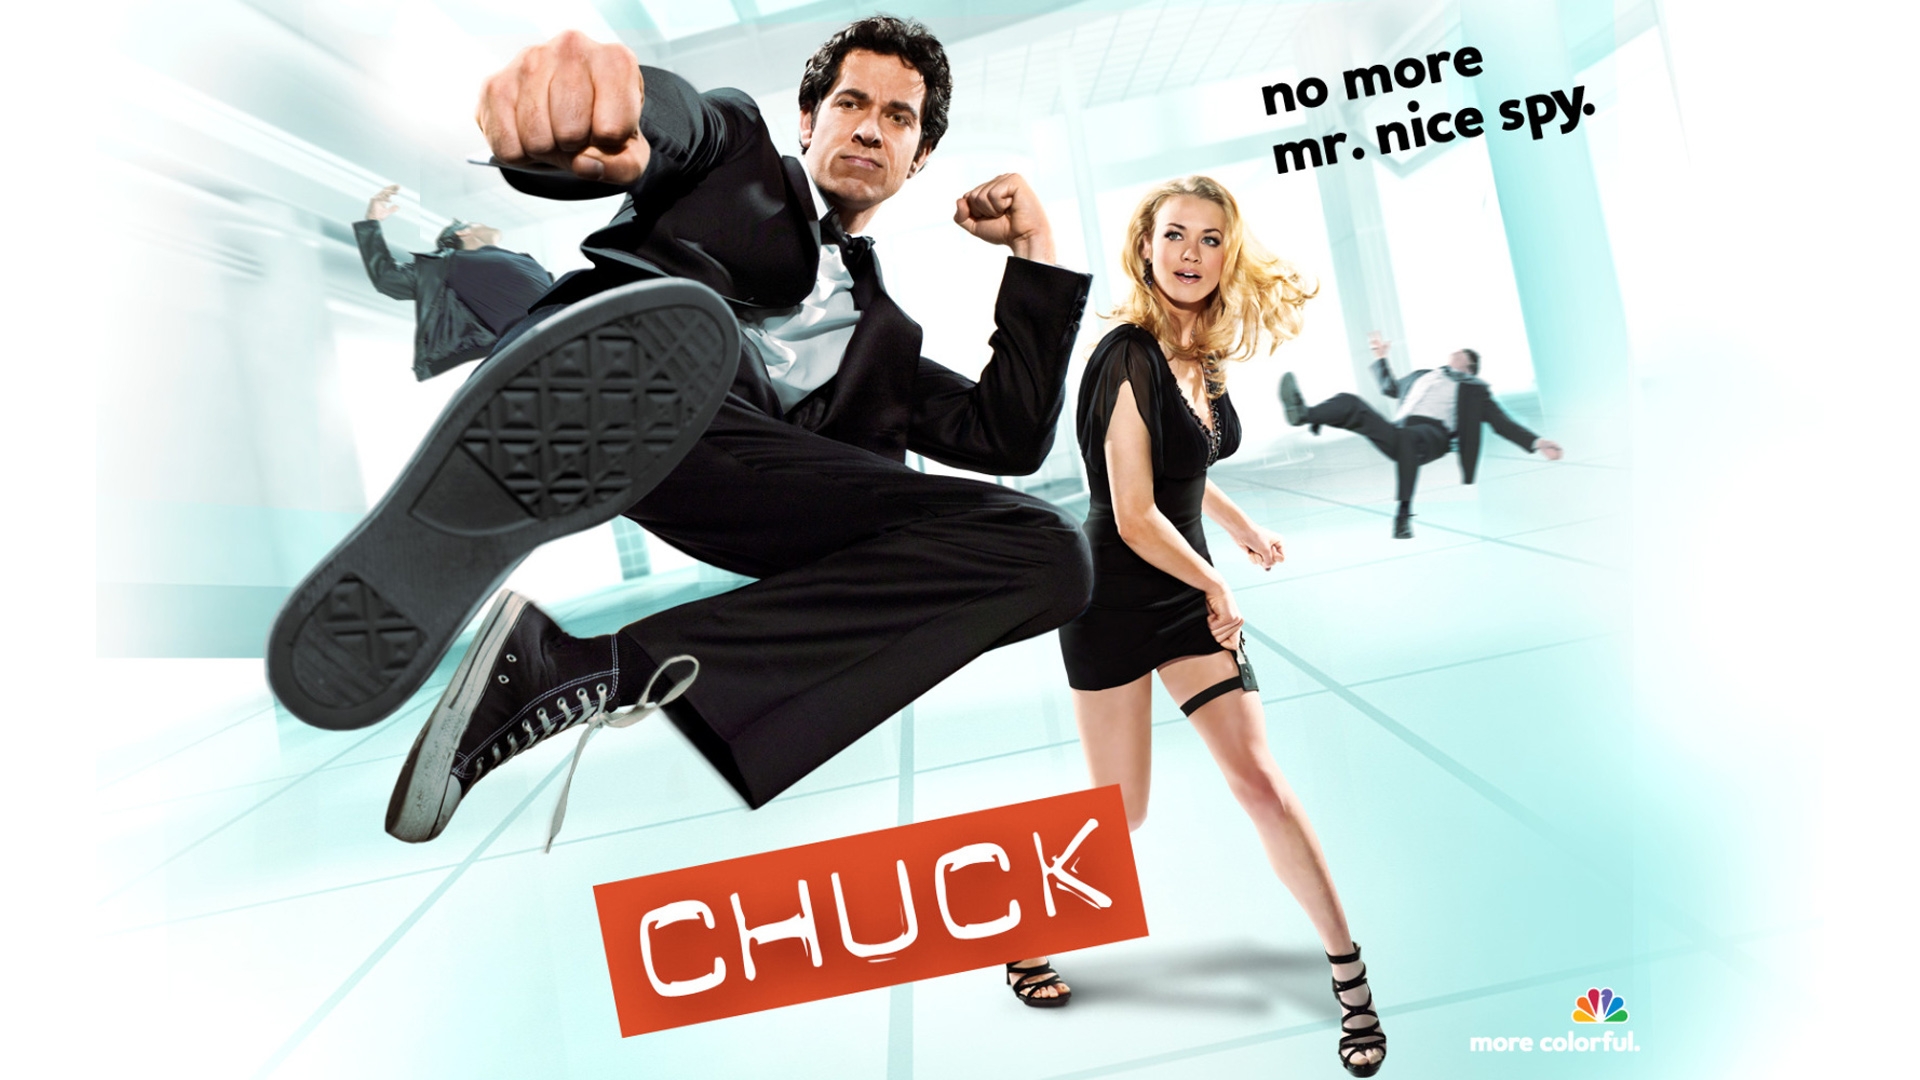 TV Show Chuck HD Wallpaper | Background Image